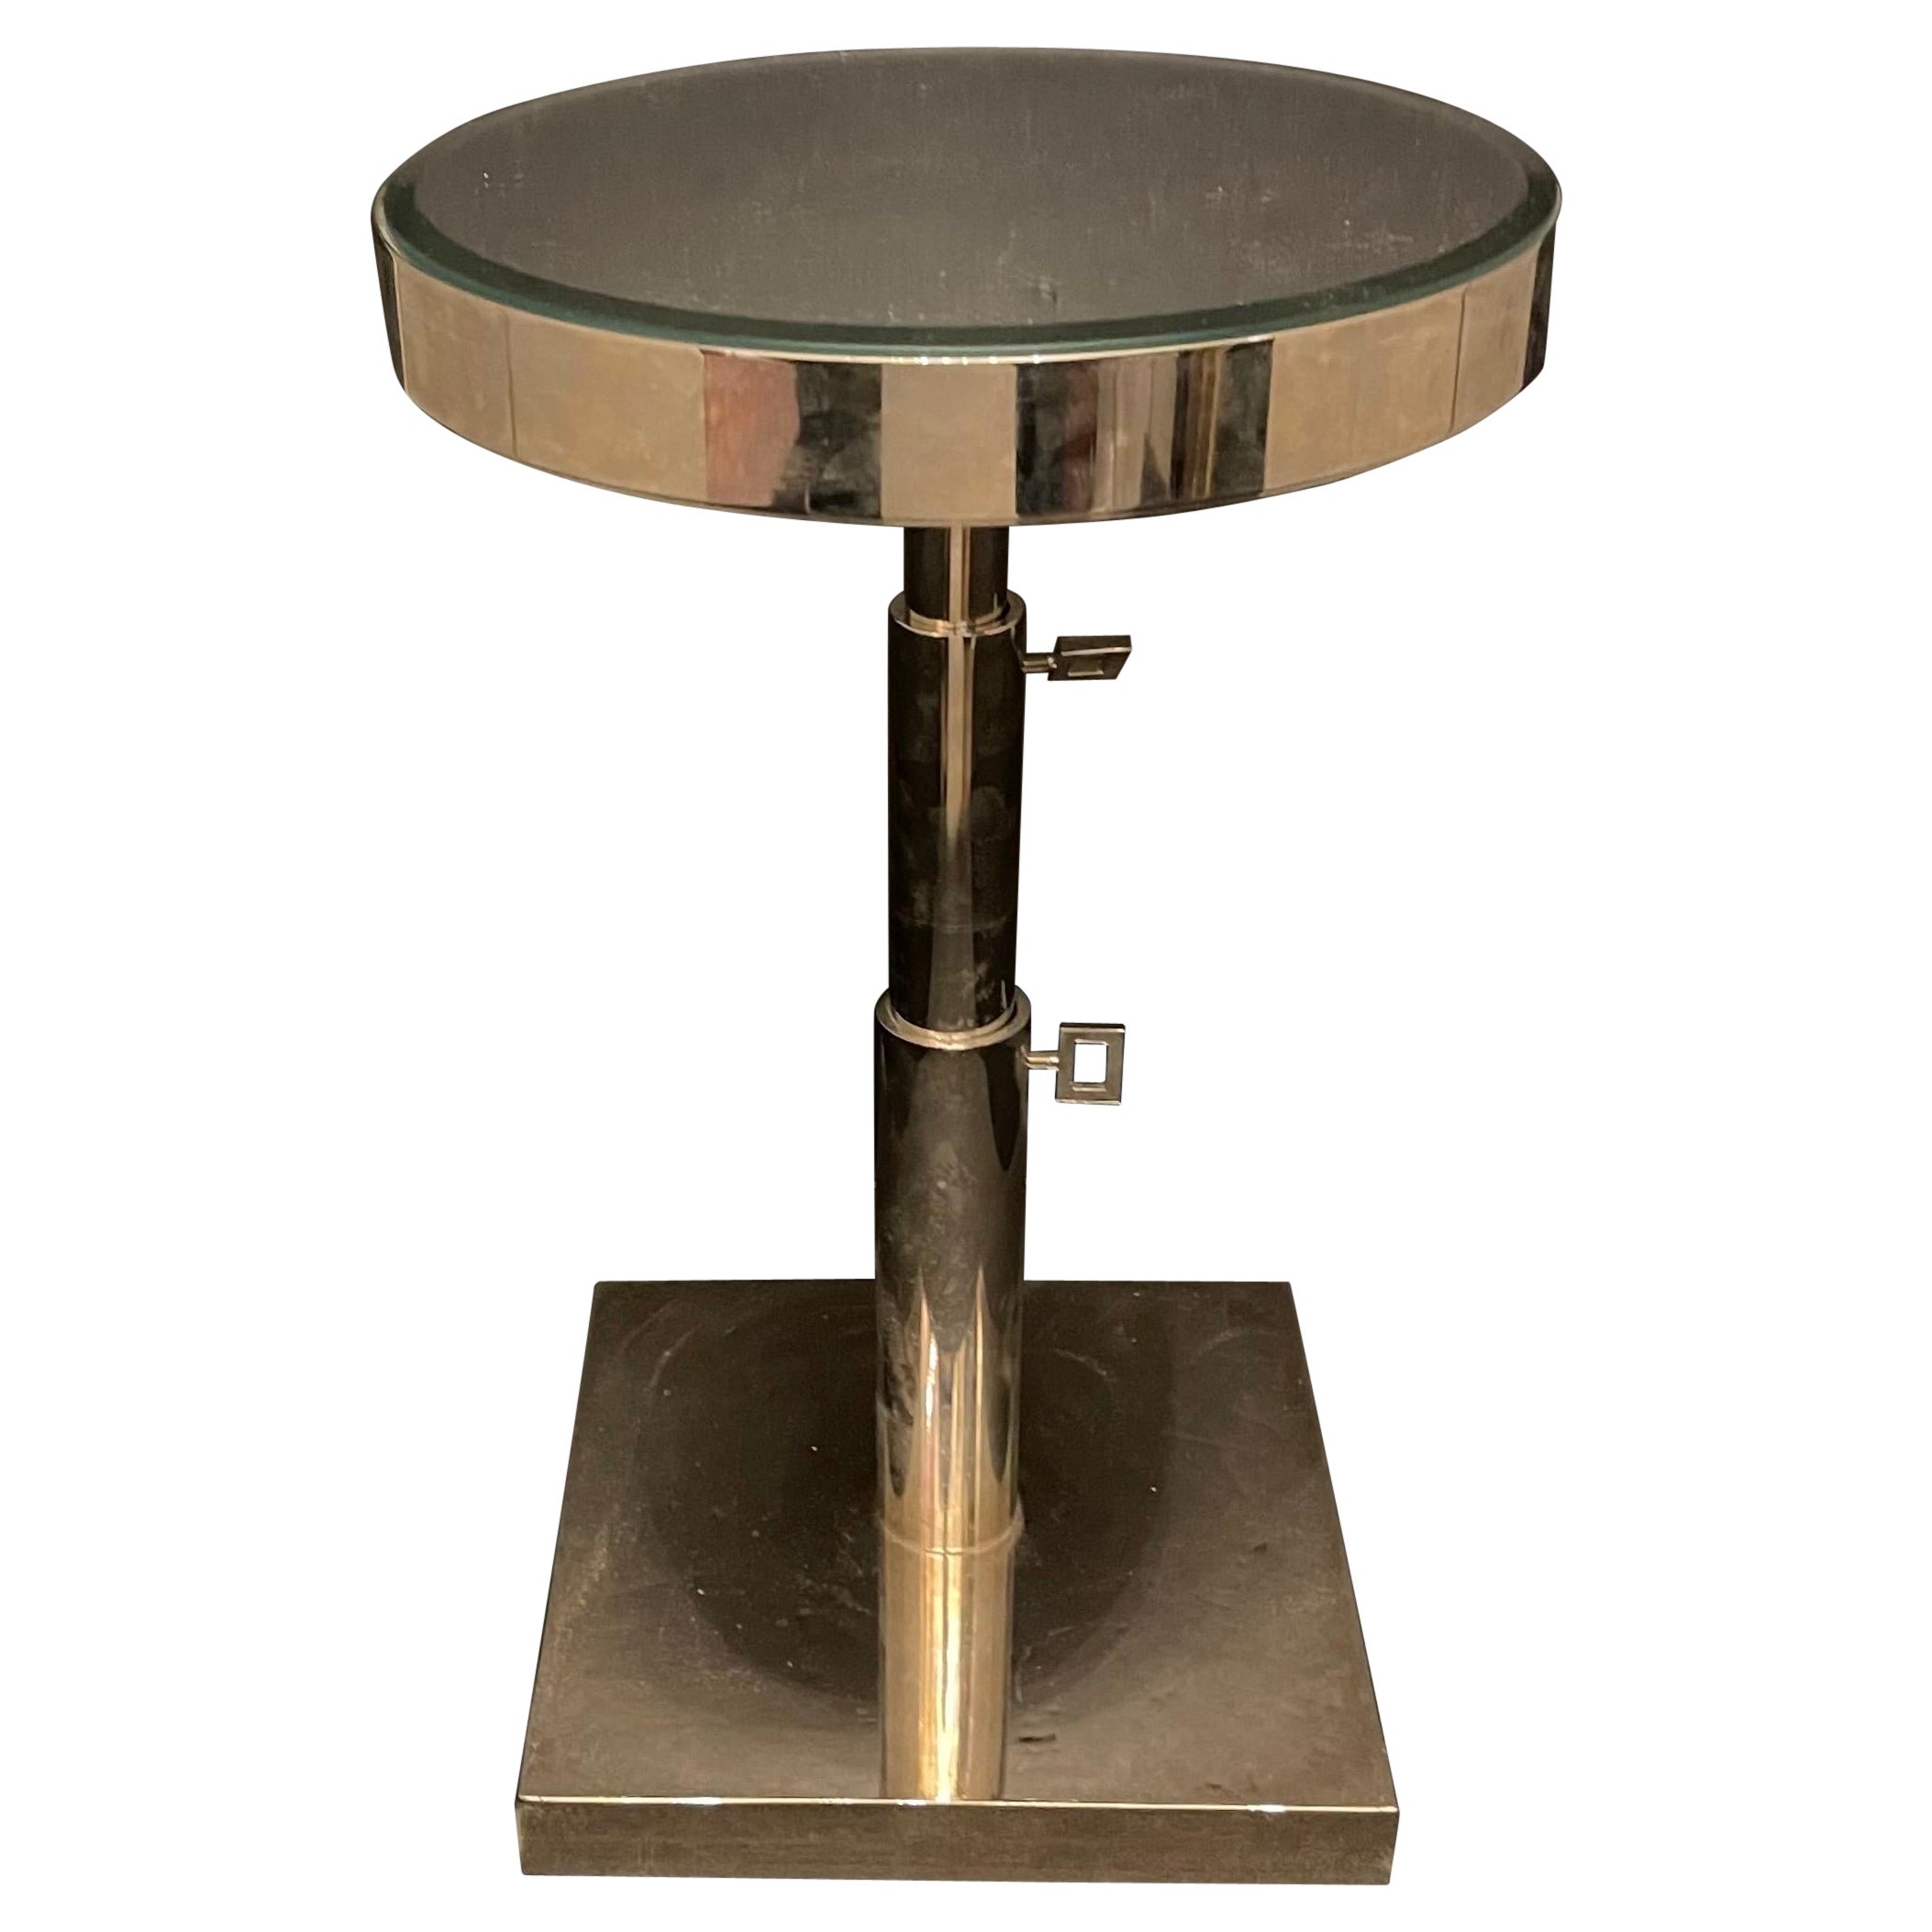 Wonderful Lorin Marsh Polished Nickel Round Mirrored Top Telescoping Side Table